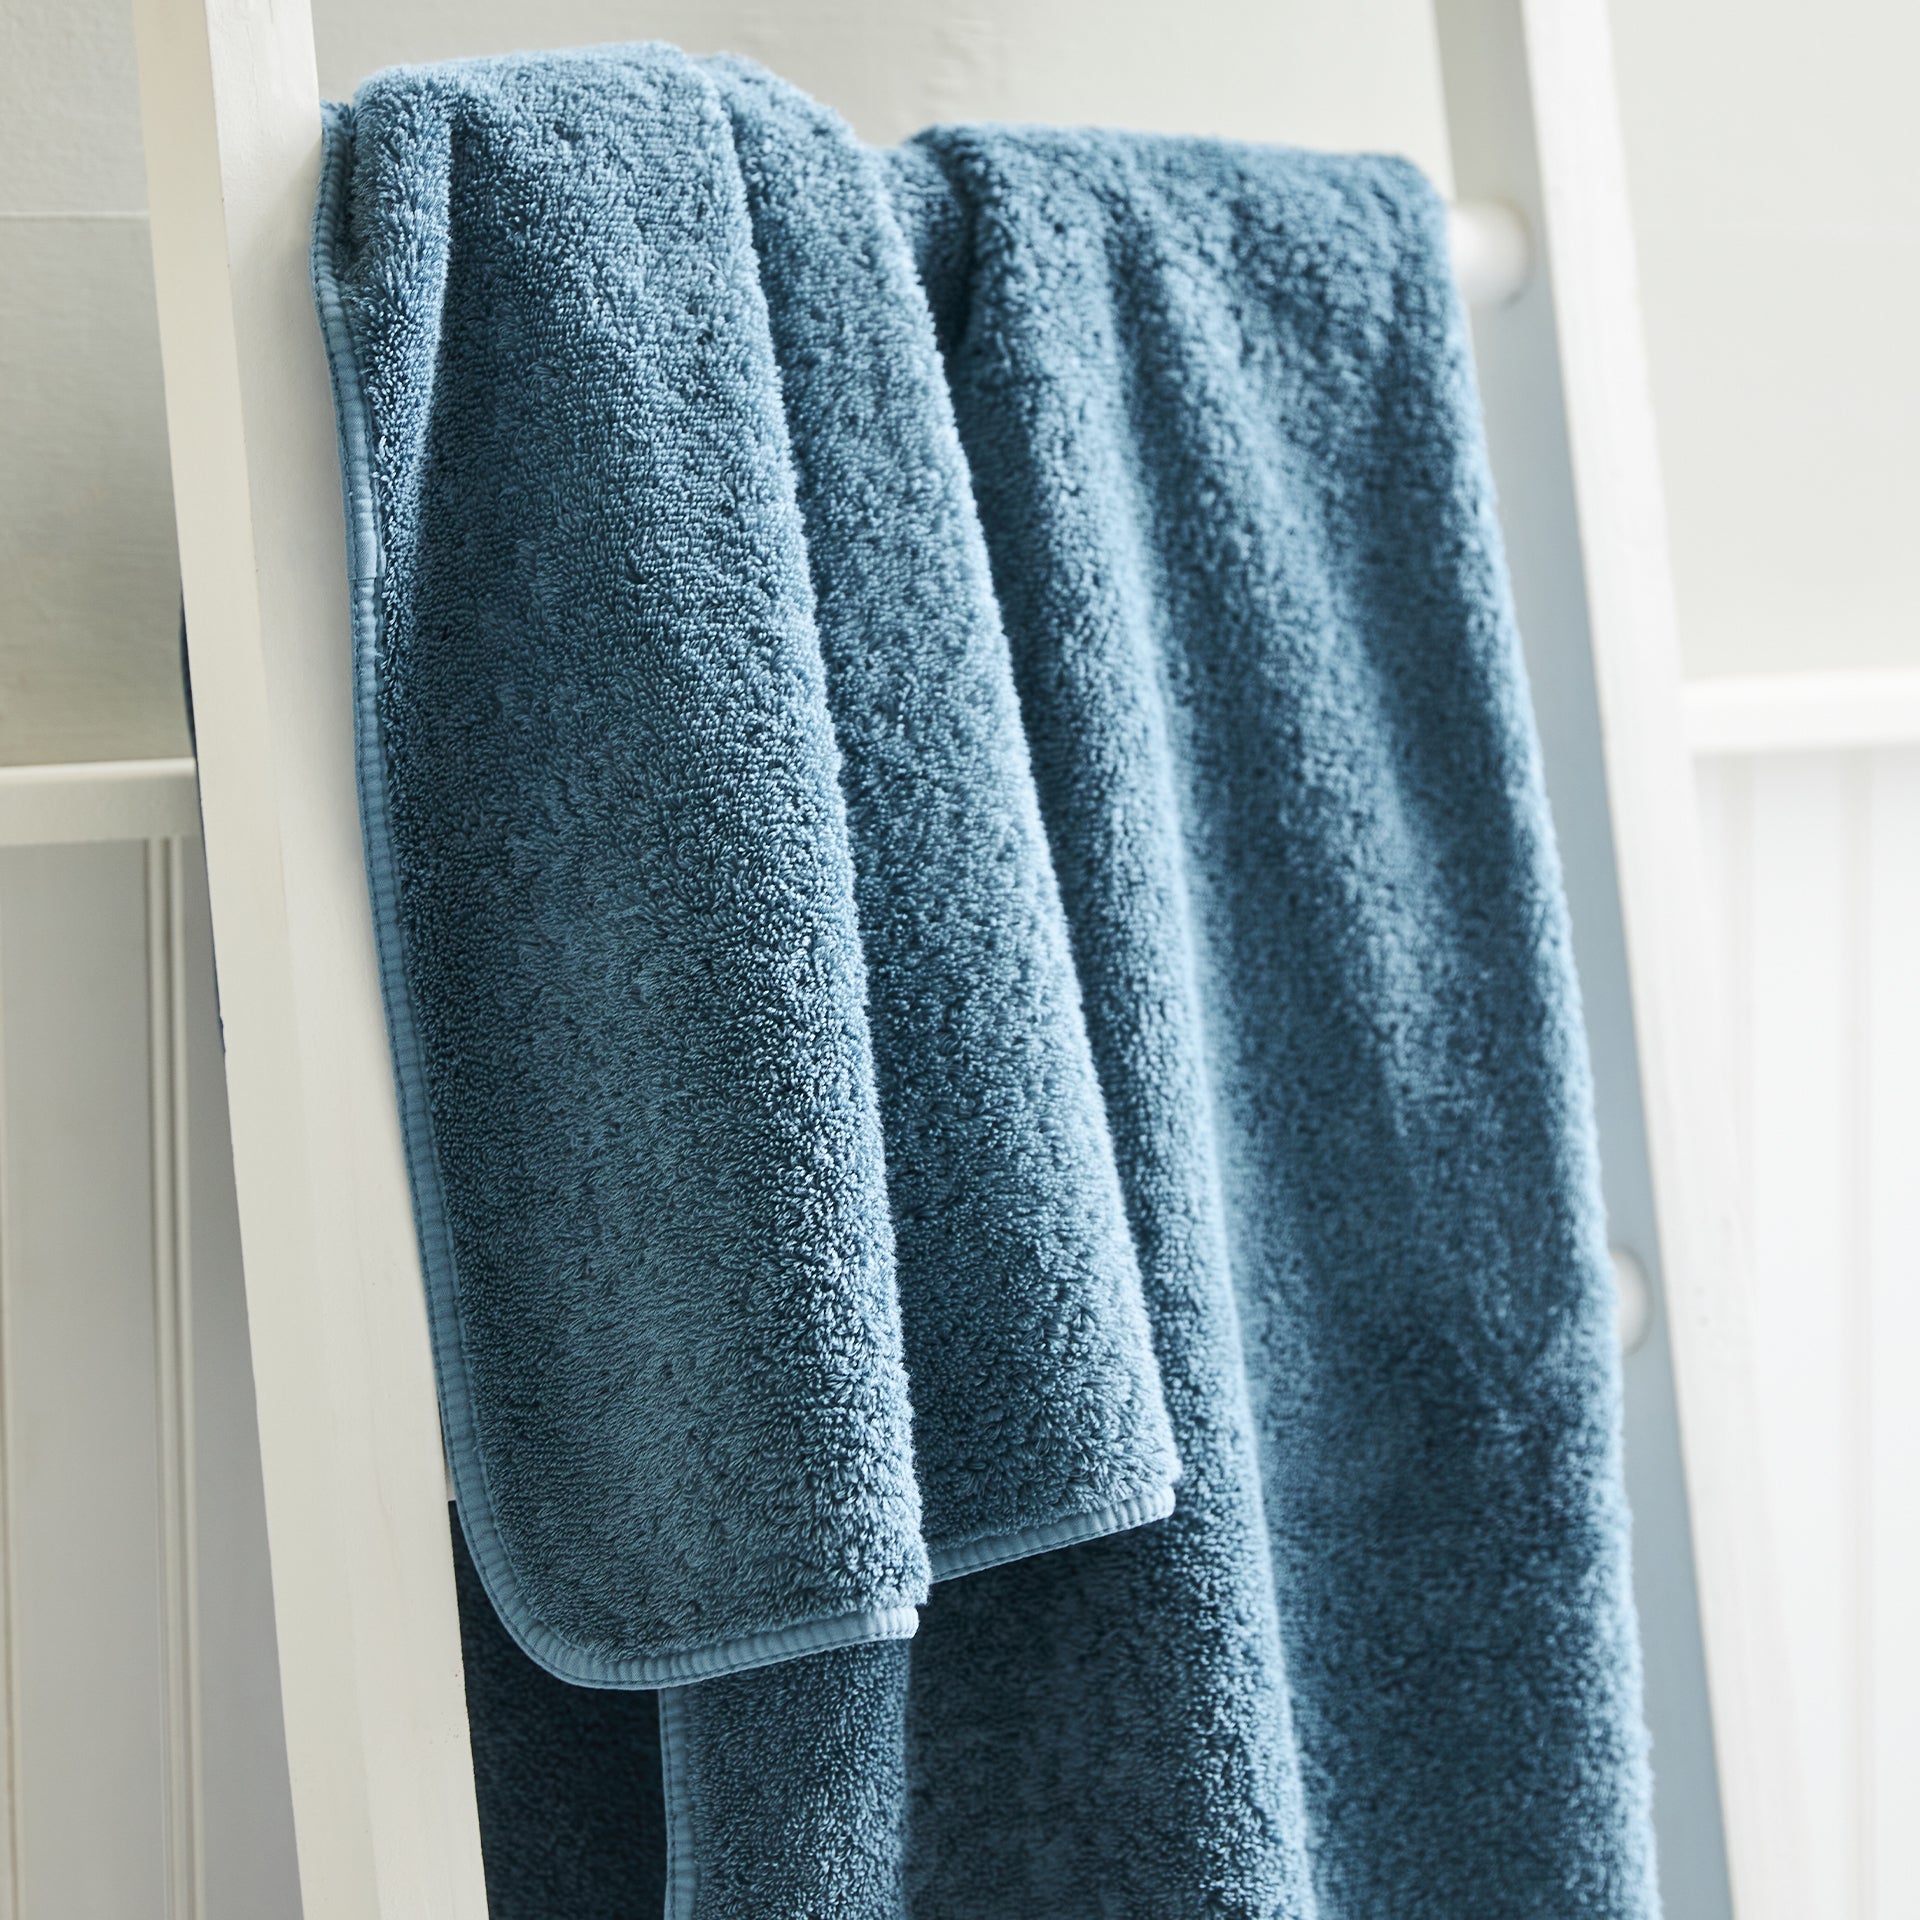 Indulgence 100% Egyptian Cotton Bath Towels